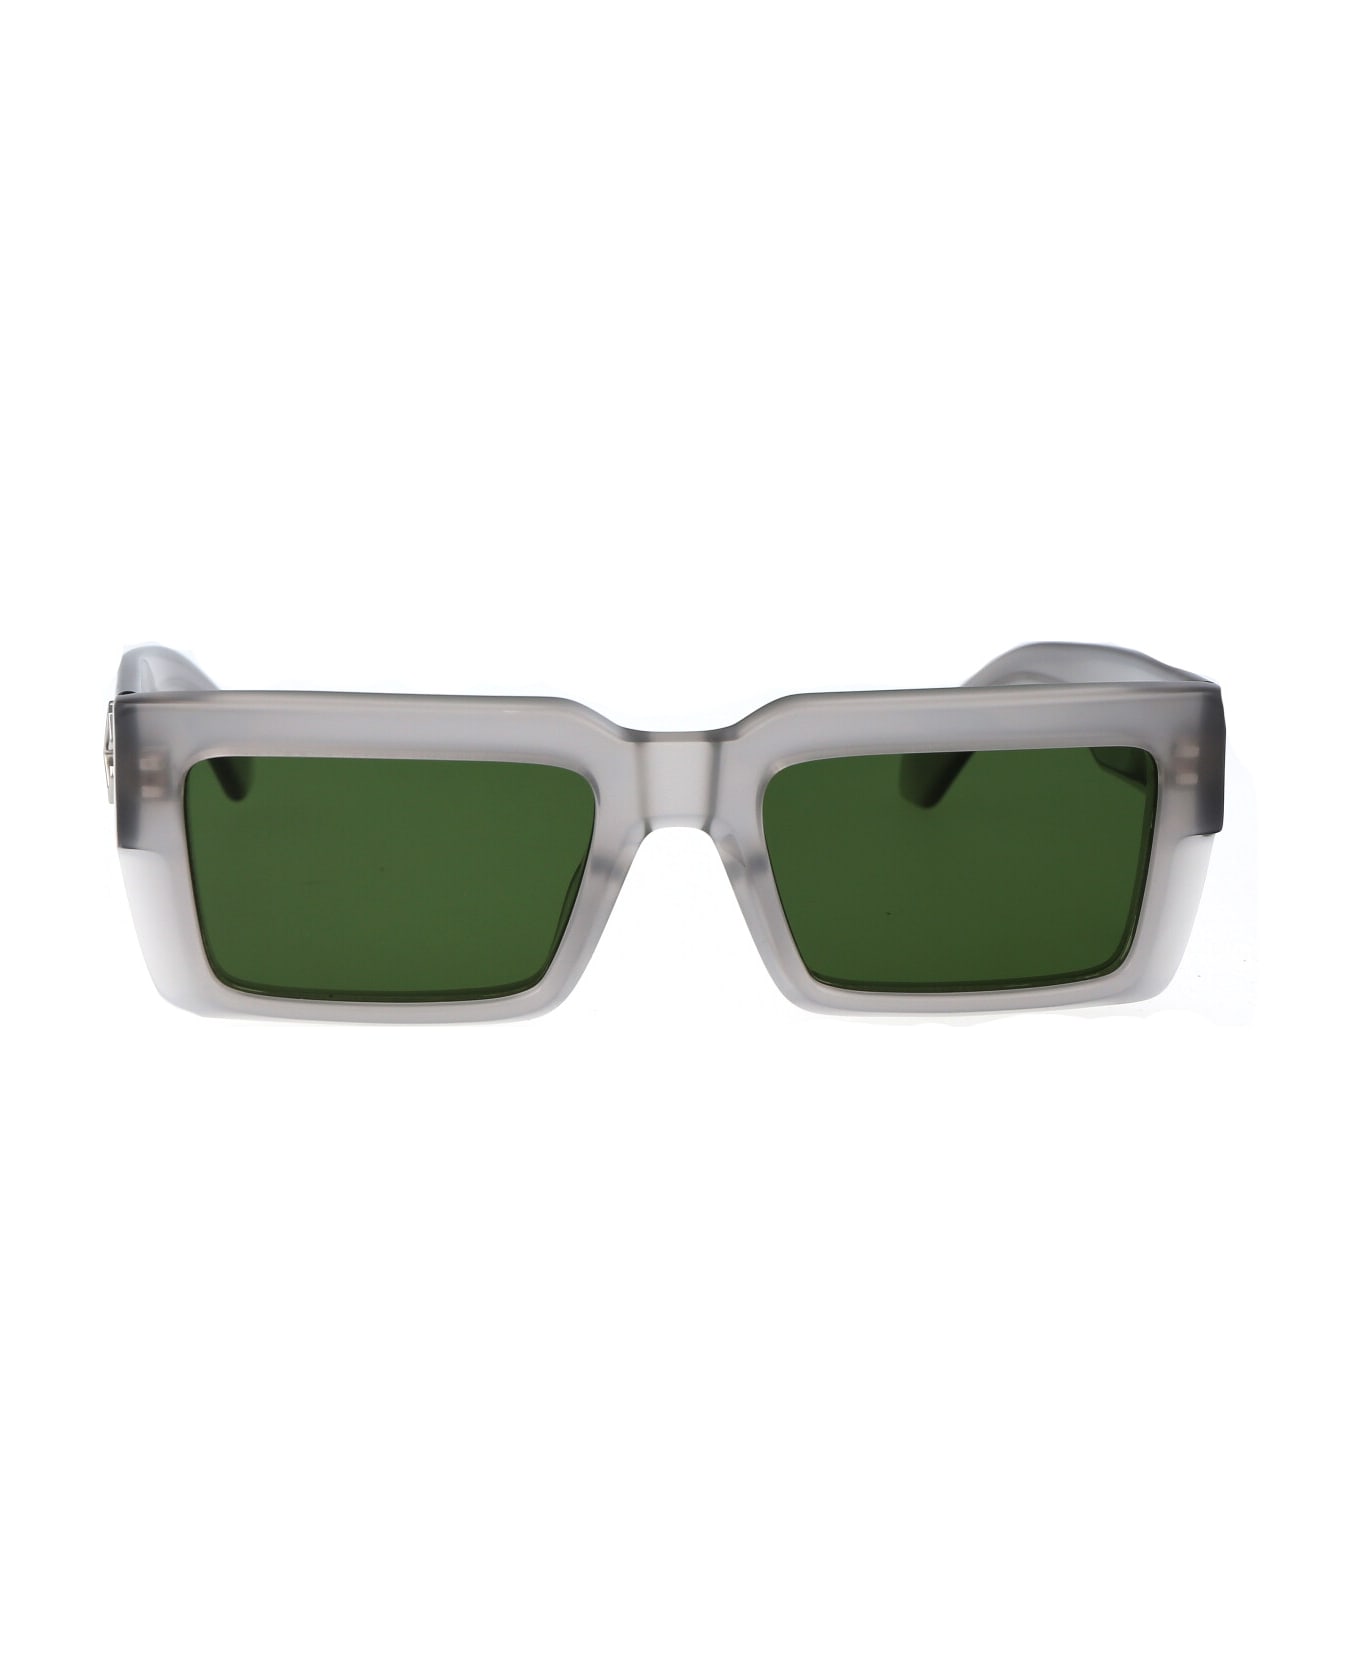 Off-White Moberly Sunglasses - 0855 GREY